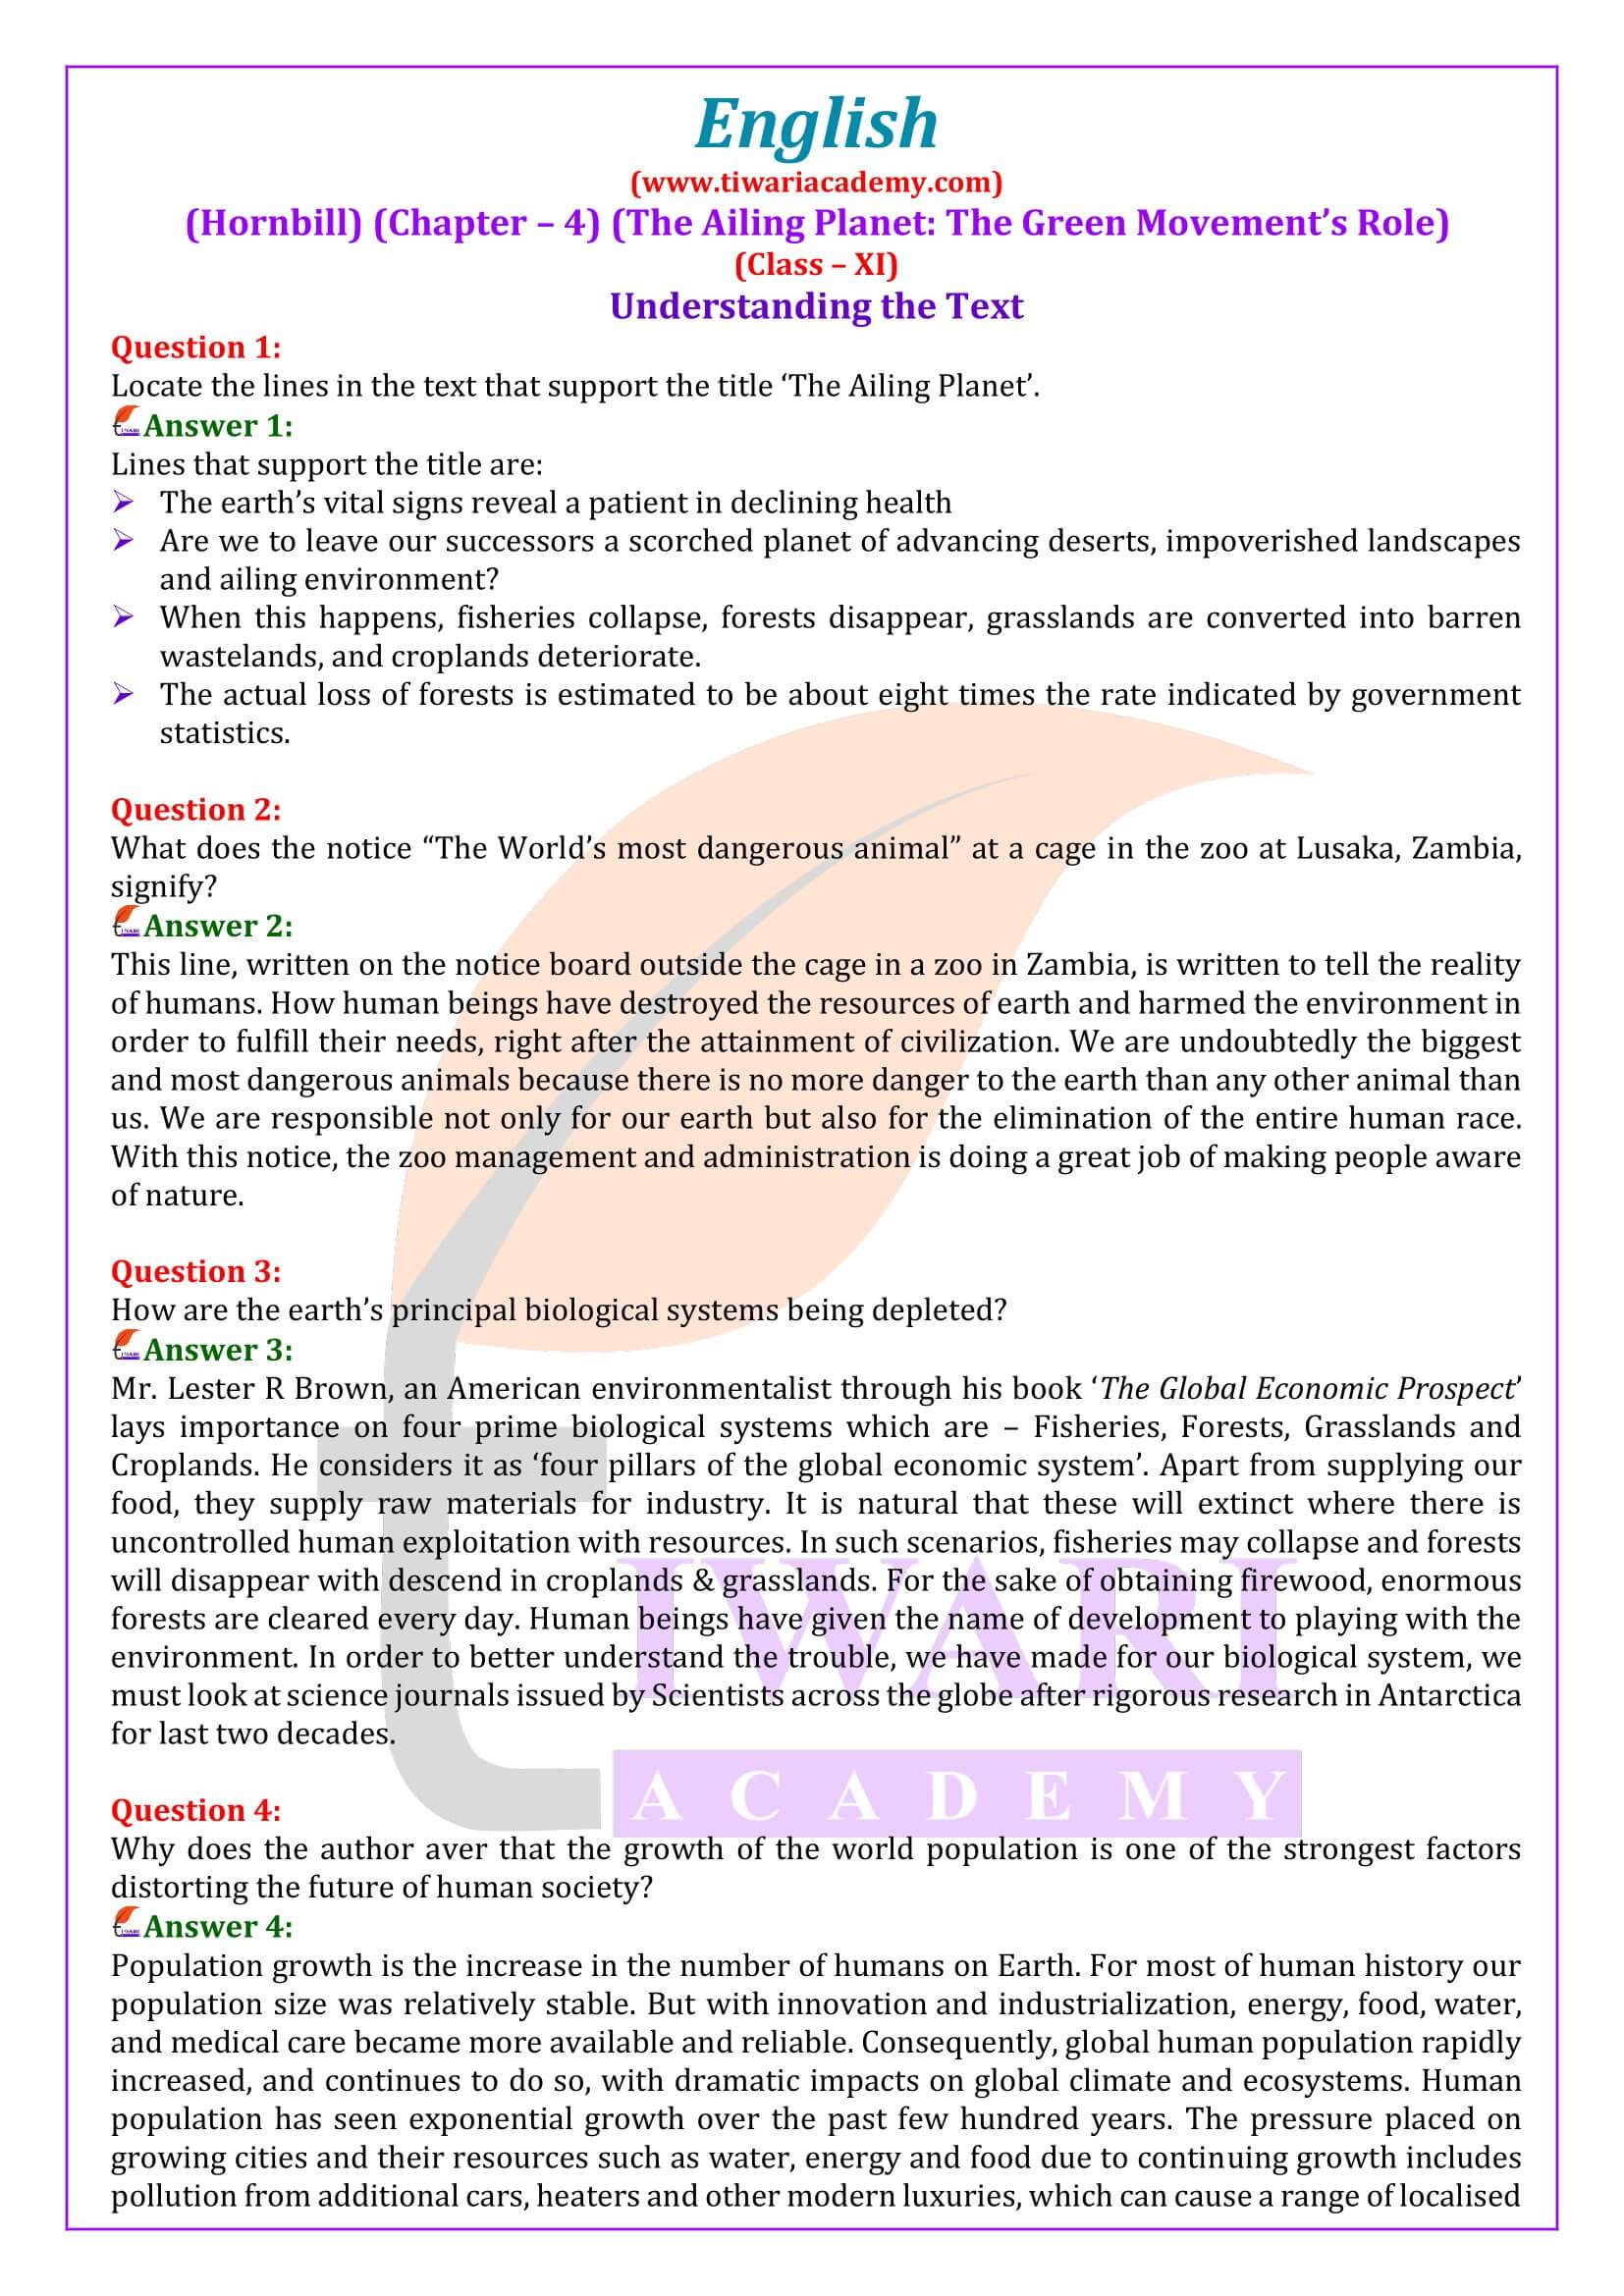 NCERT Solutions for Class 11 English Hornbill Chapter 4